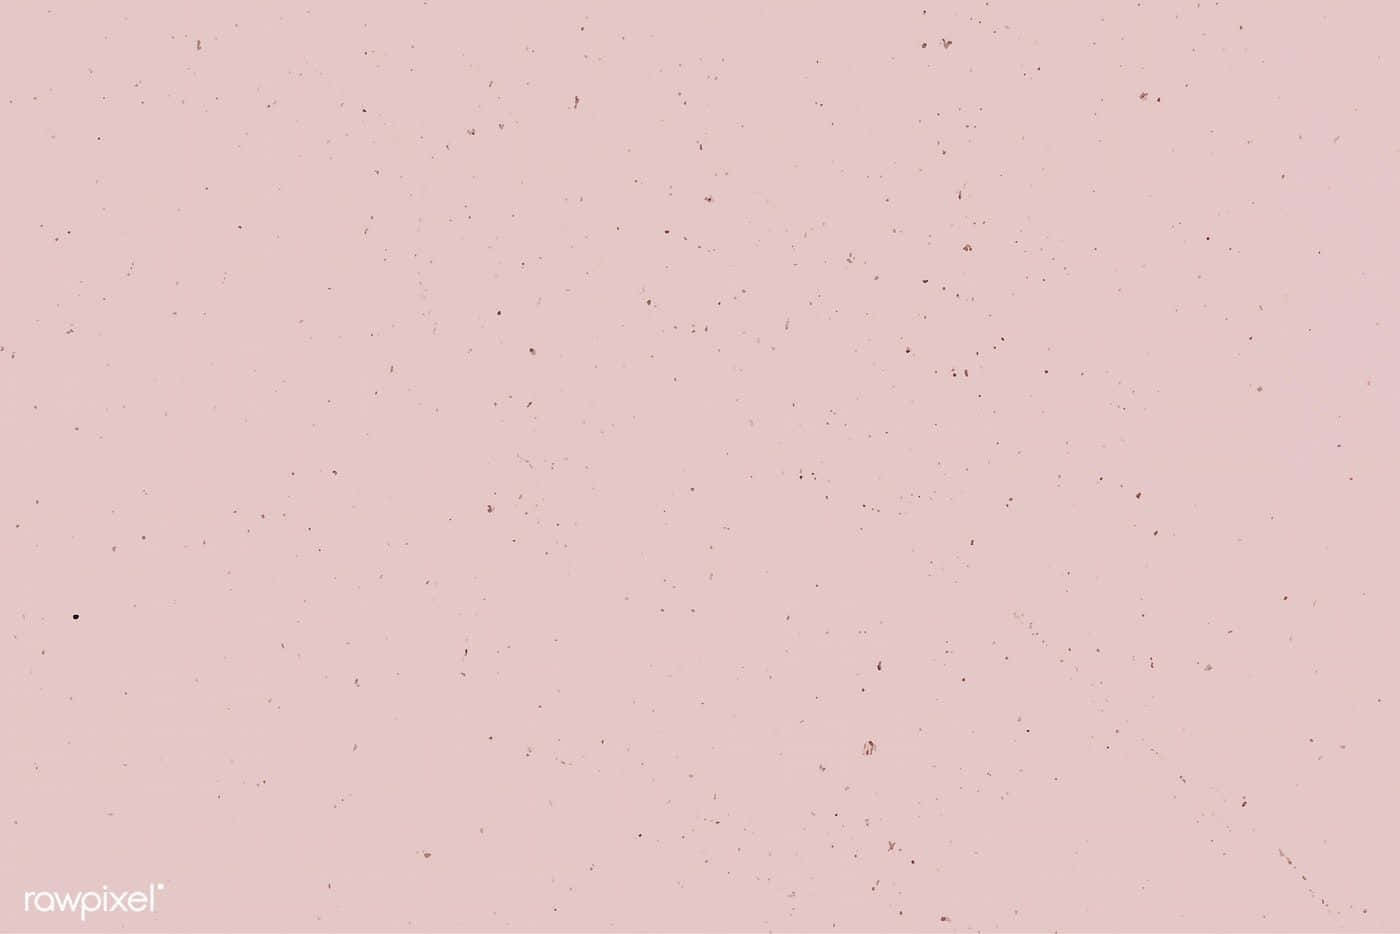 A pink plain desktop background for your computer Wallpaper